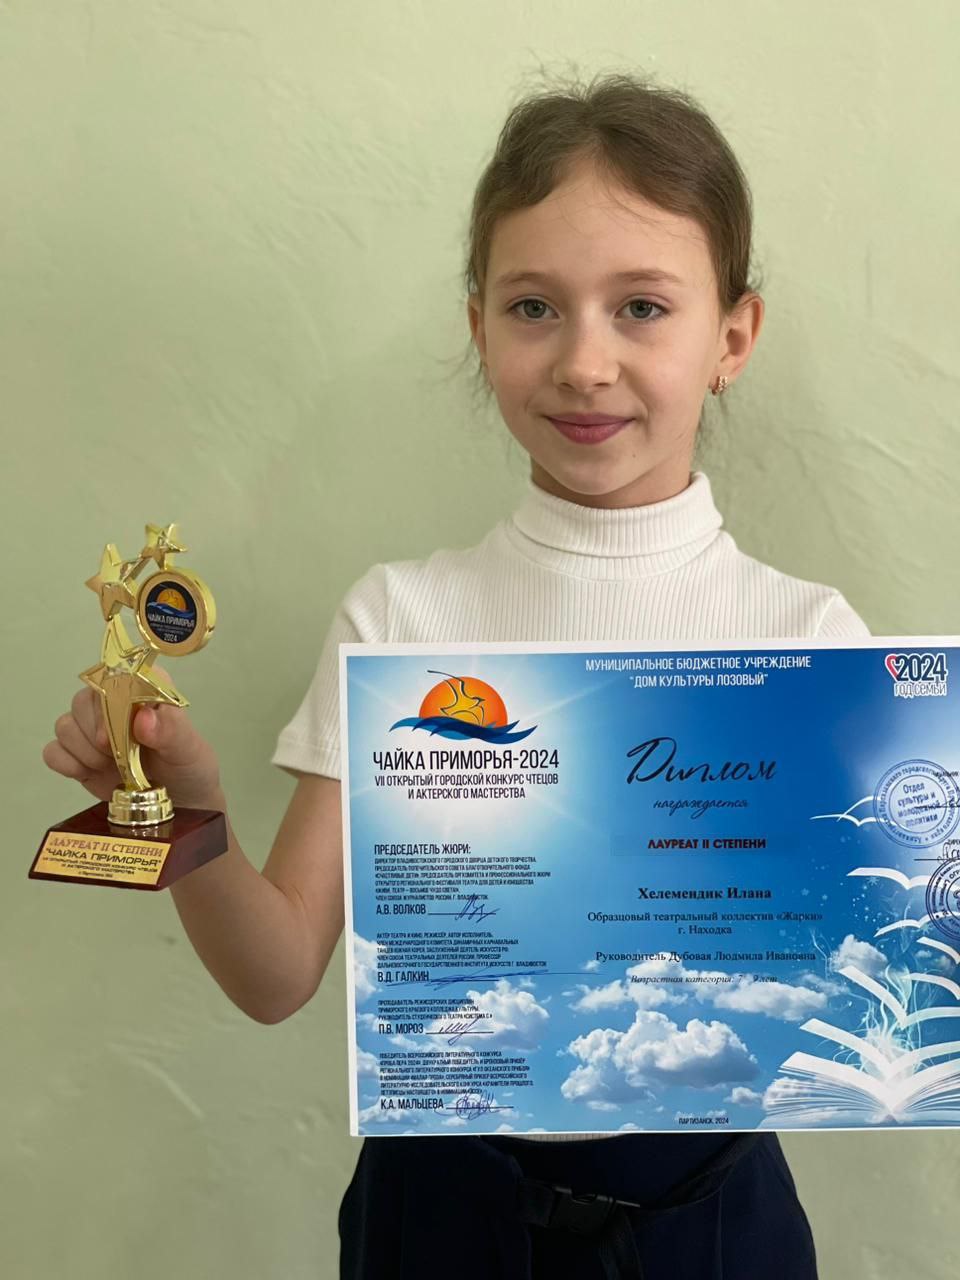 Хелемендик Илана стала лауреатом 2 степени в конкурсе чтецов